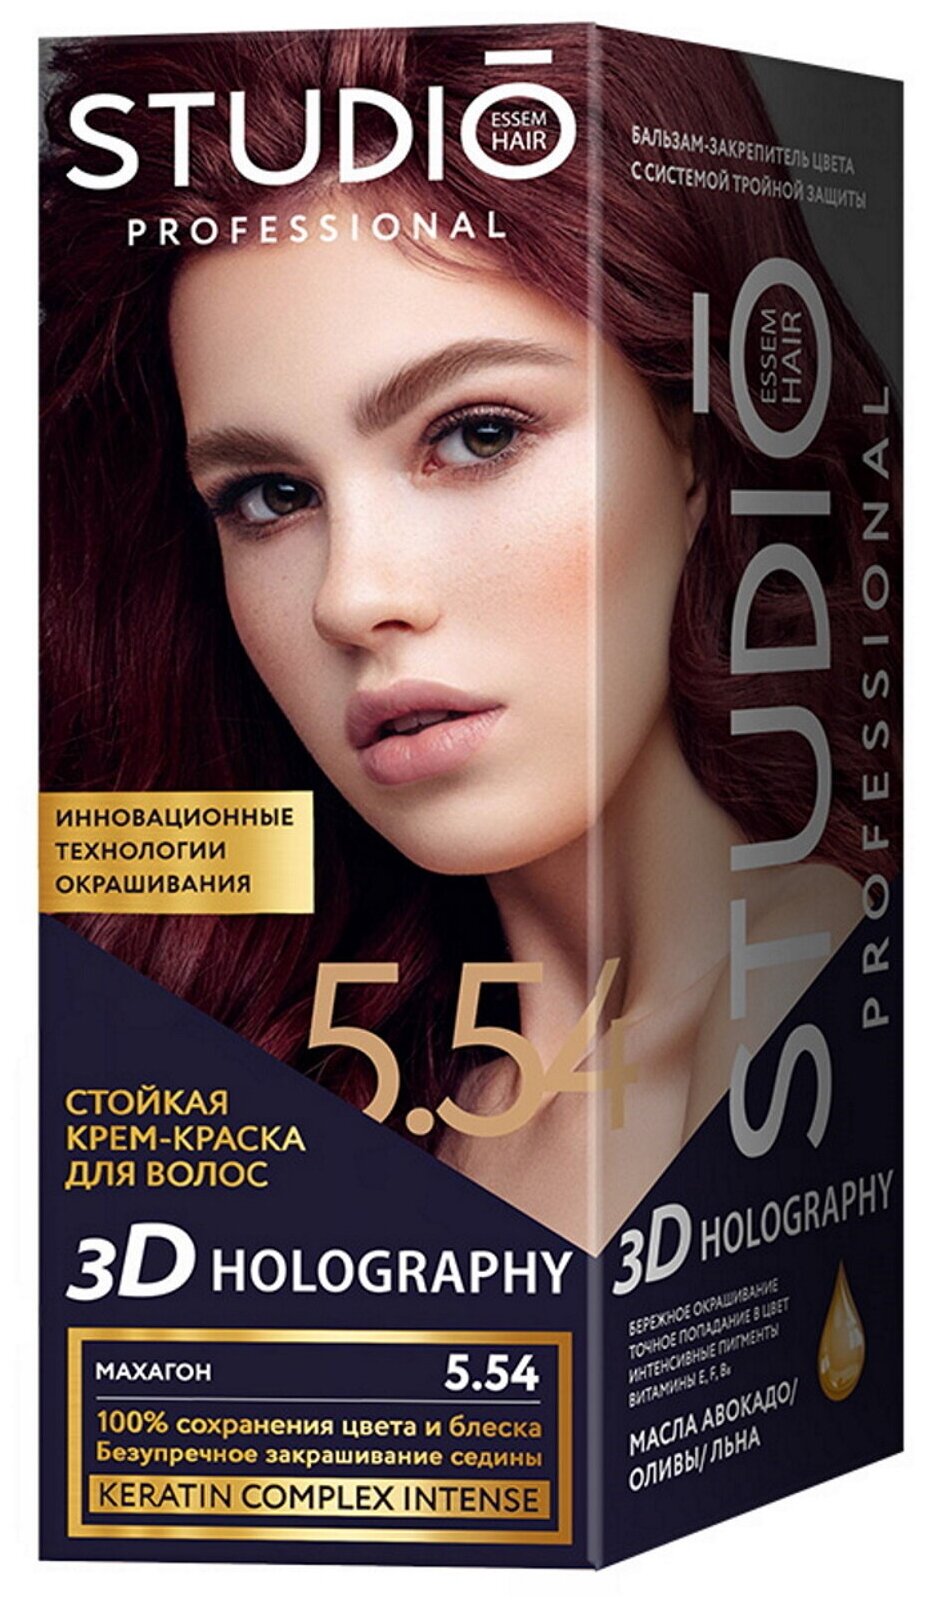 Комплект 3D HOLOGRAPHY для окрашивания волос STUDIO PROFESSIONAL 5.54 махагон 2*50+15 мл